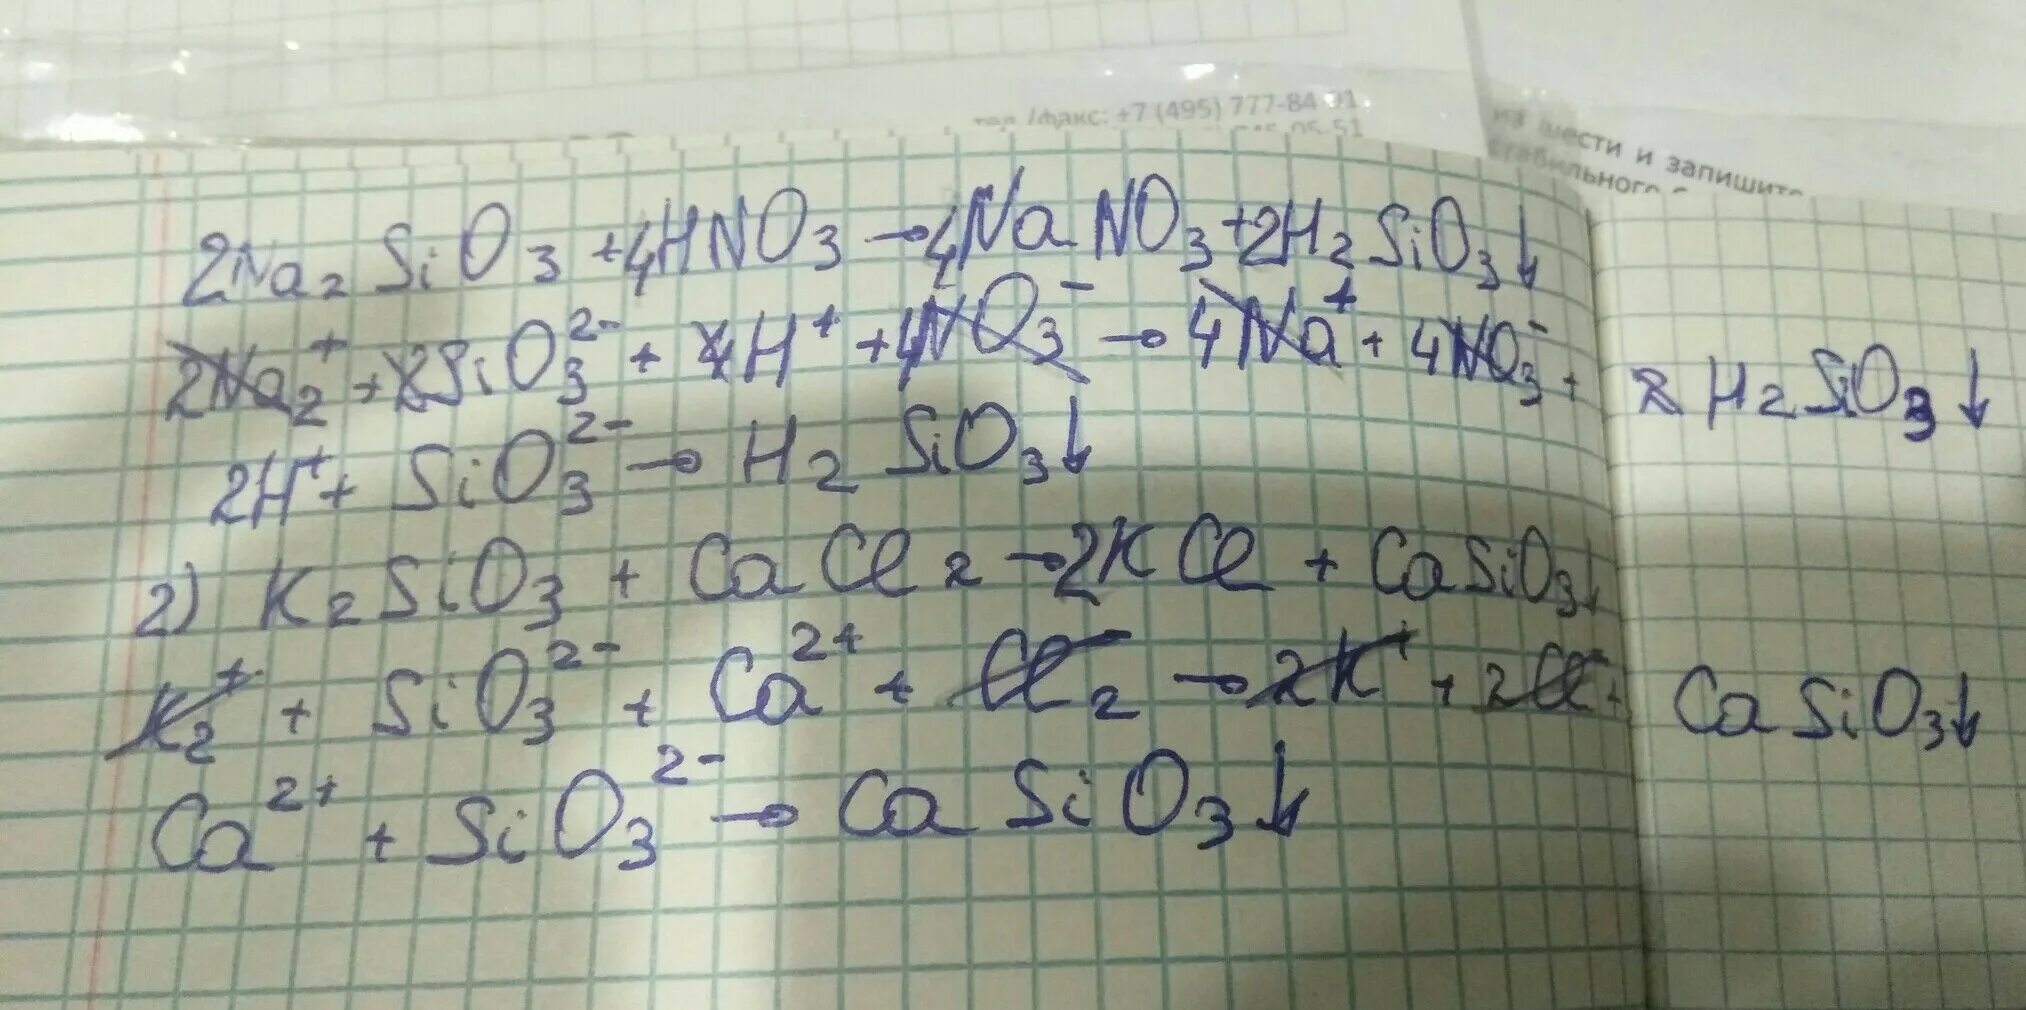 4 na2sio3 hcl. Na2sio3 hno3. K2sio3+hno3. Na2sio3 hno3 уравнение. Na2sio3 + hno3 ионное уравнение.